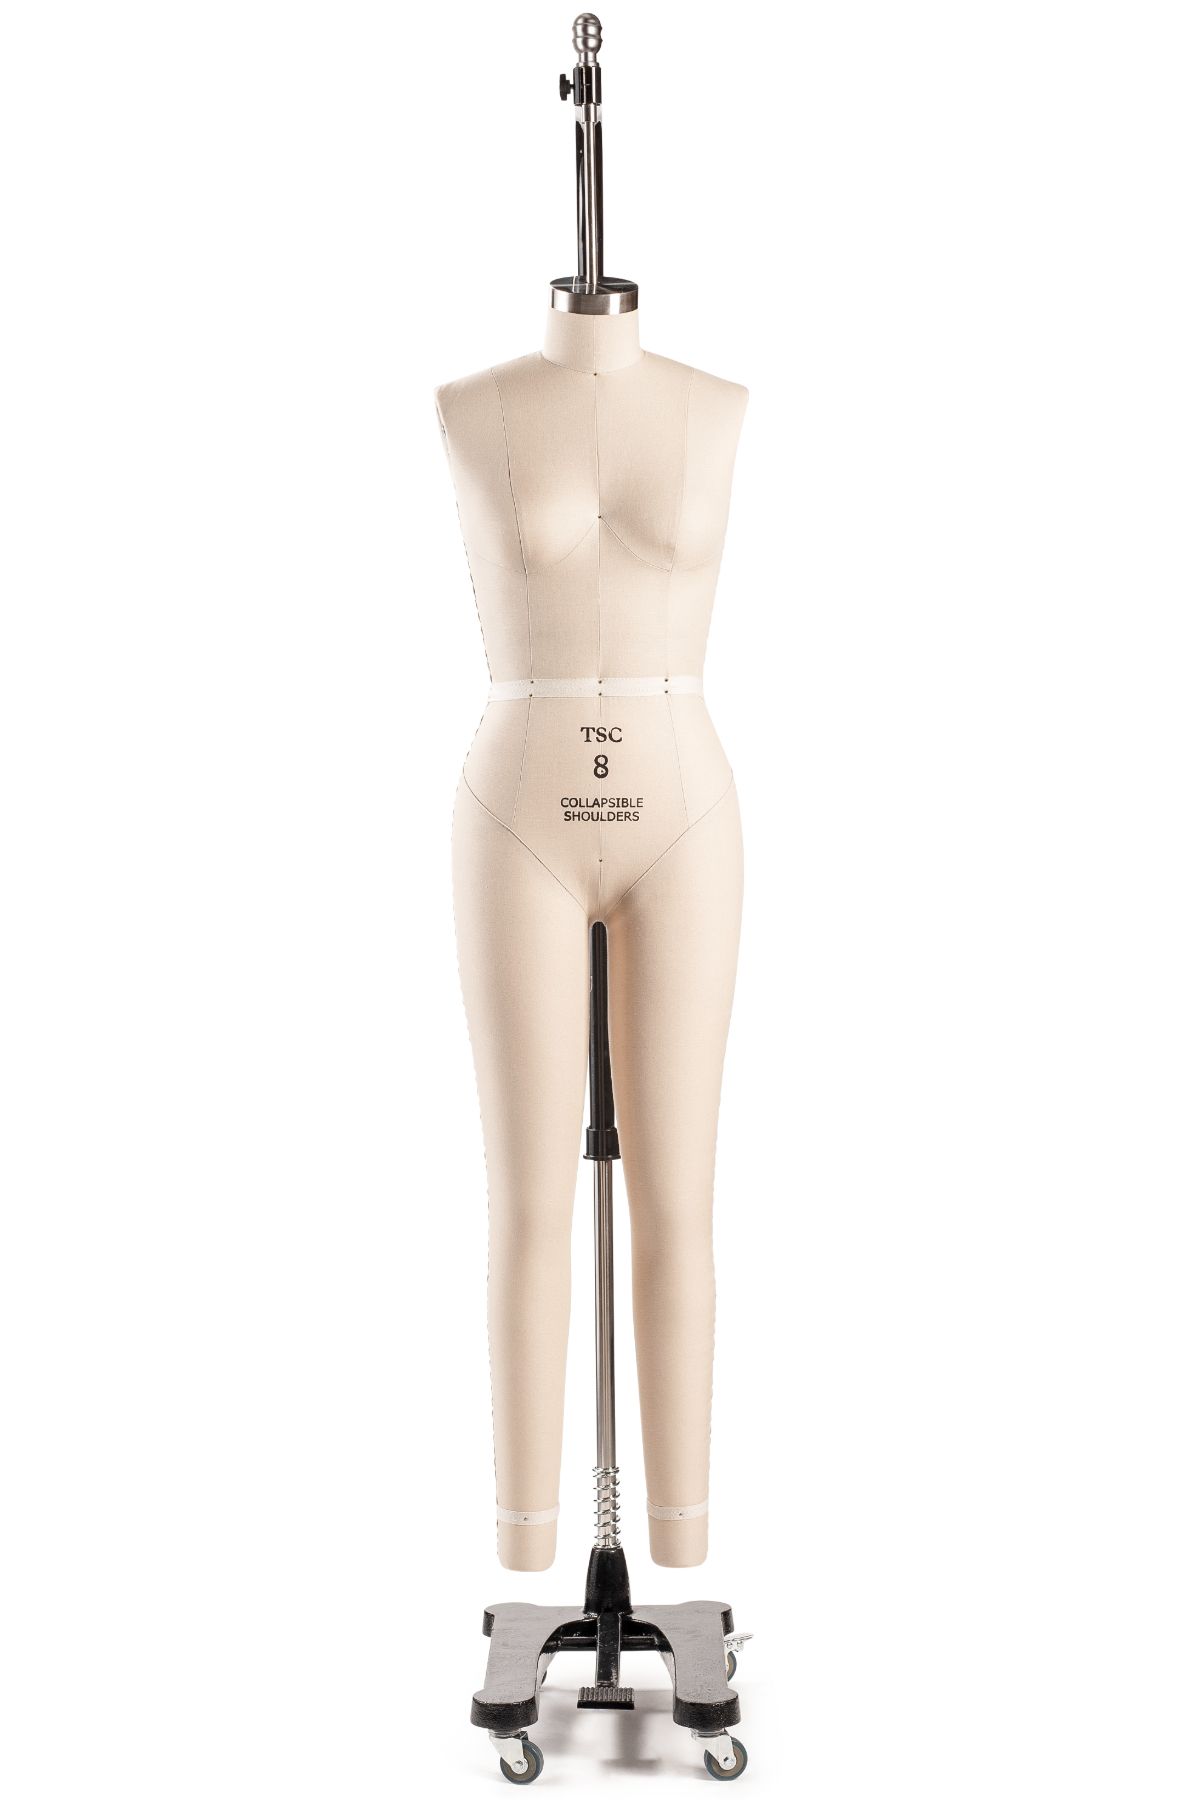 Female Torso Clothing Manikin Display Plus Size Dress Form Mannequin Body by EZ Mannequins 